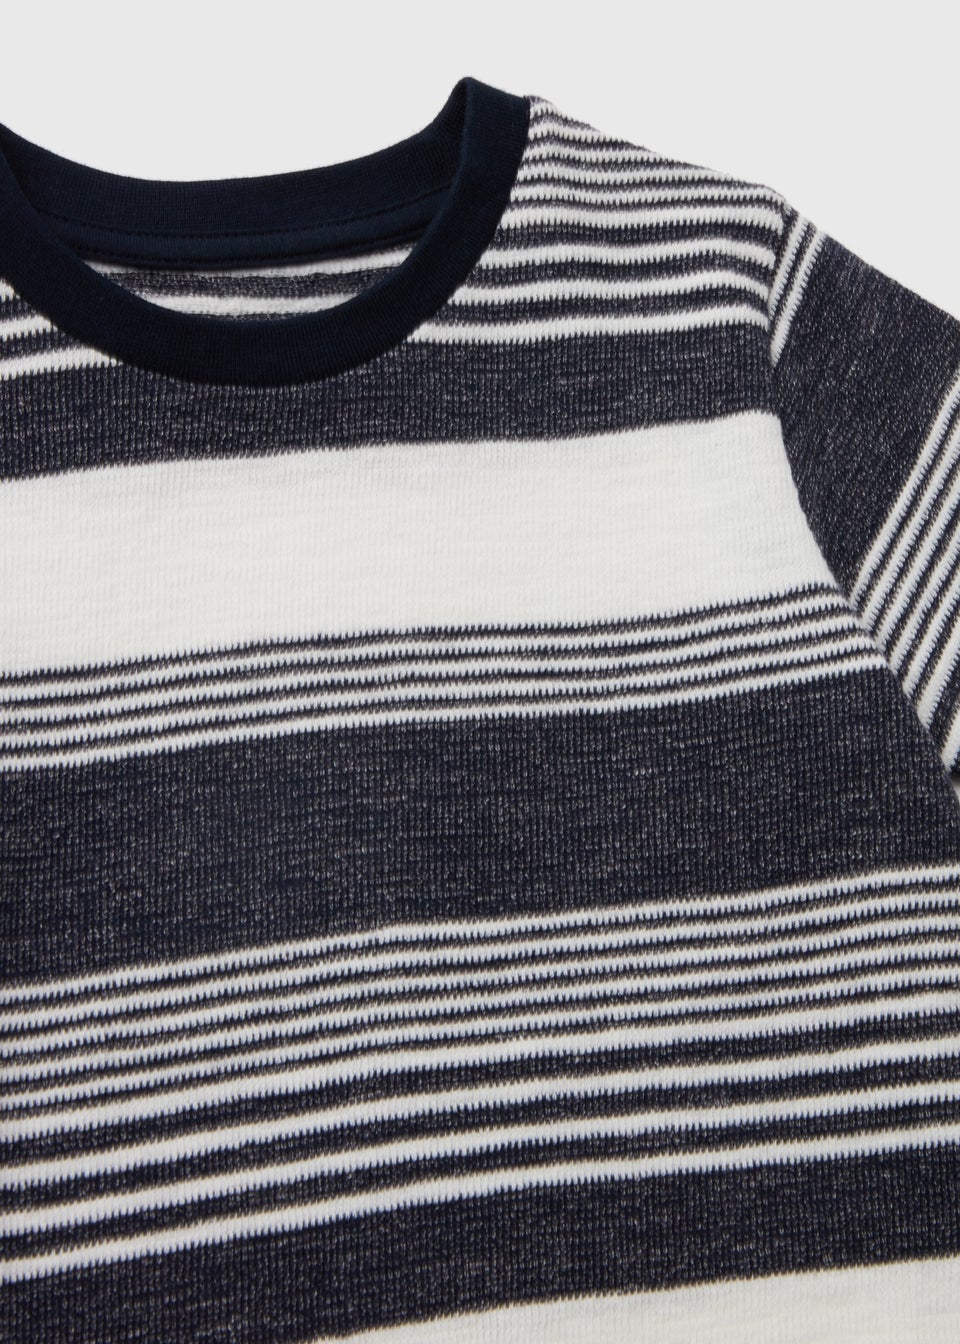 Boys Navy & White Stripe Textured T-Shirt (1-7yrs)